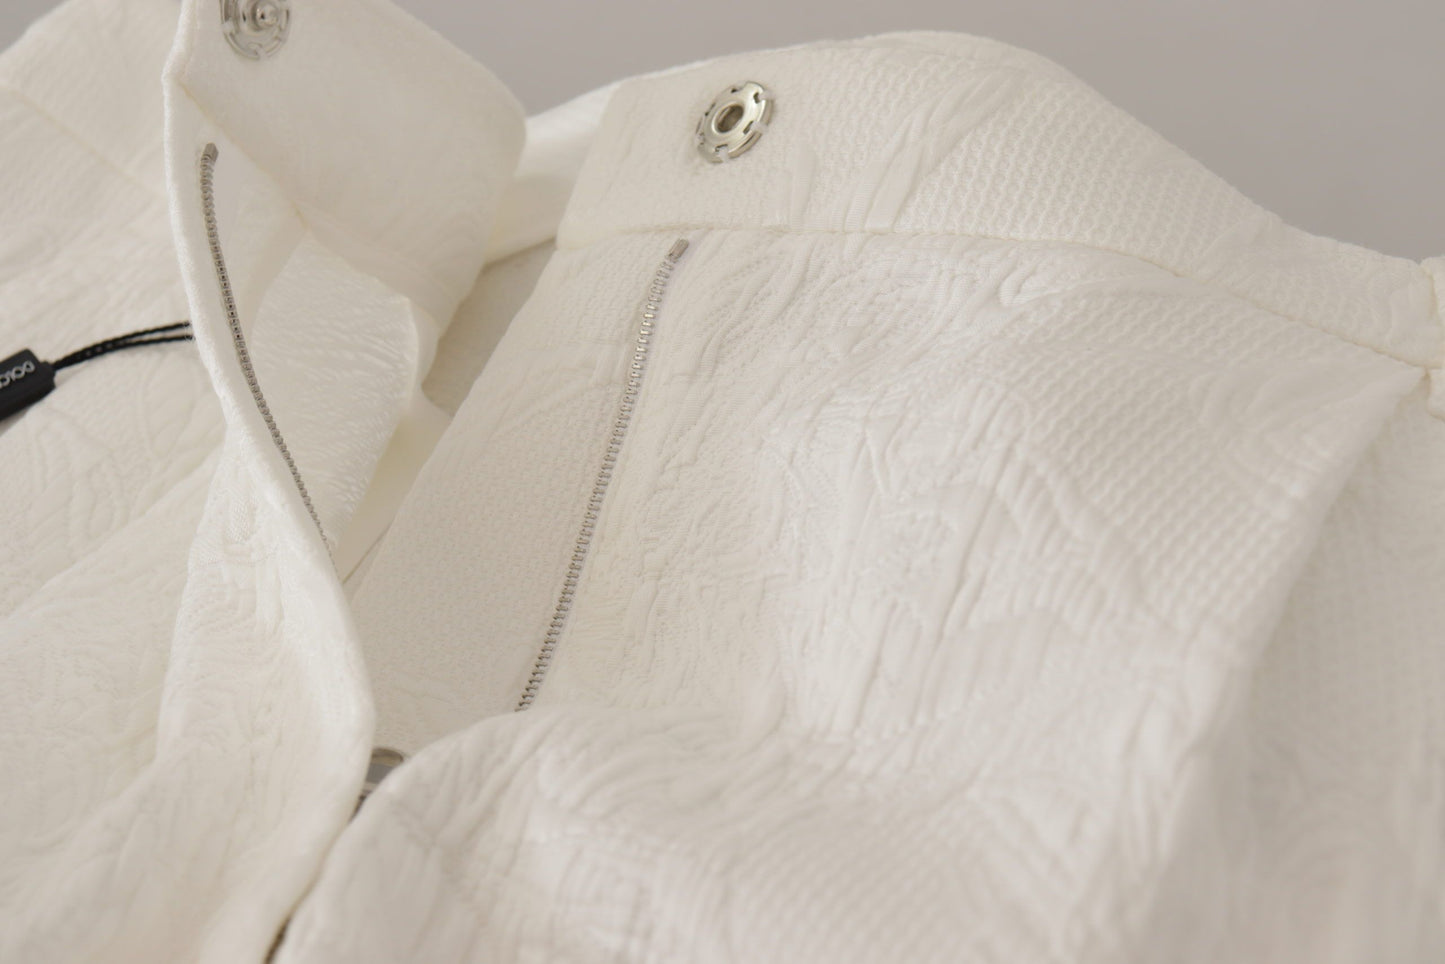 Dolce & Gabbana Elegant High Waist White Culotte Shorts